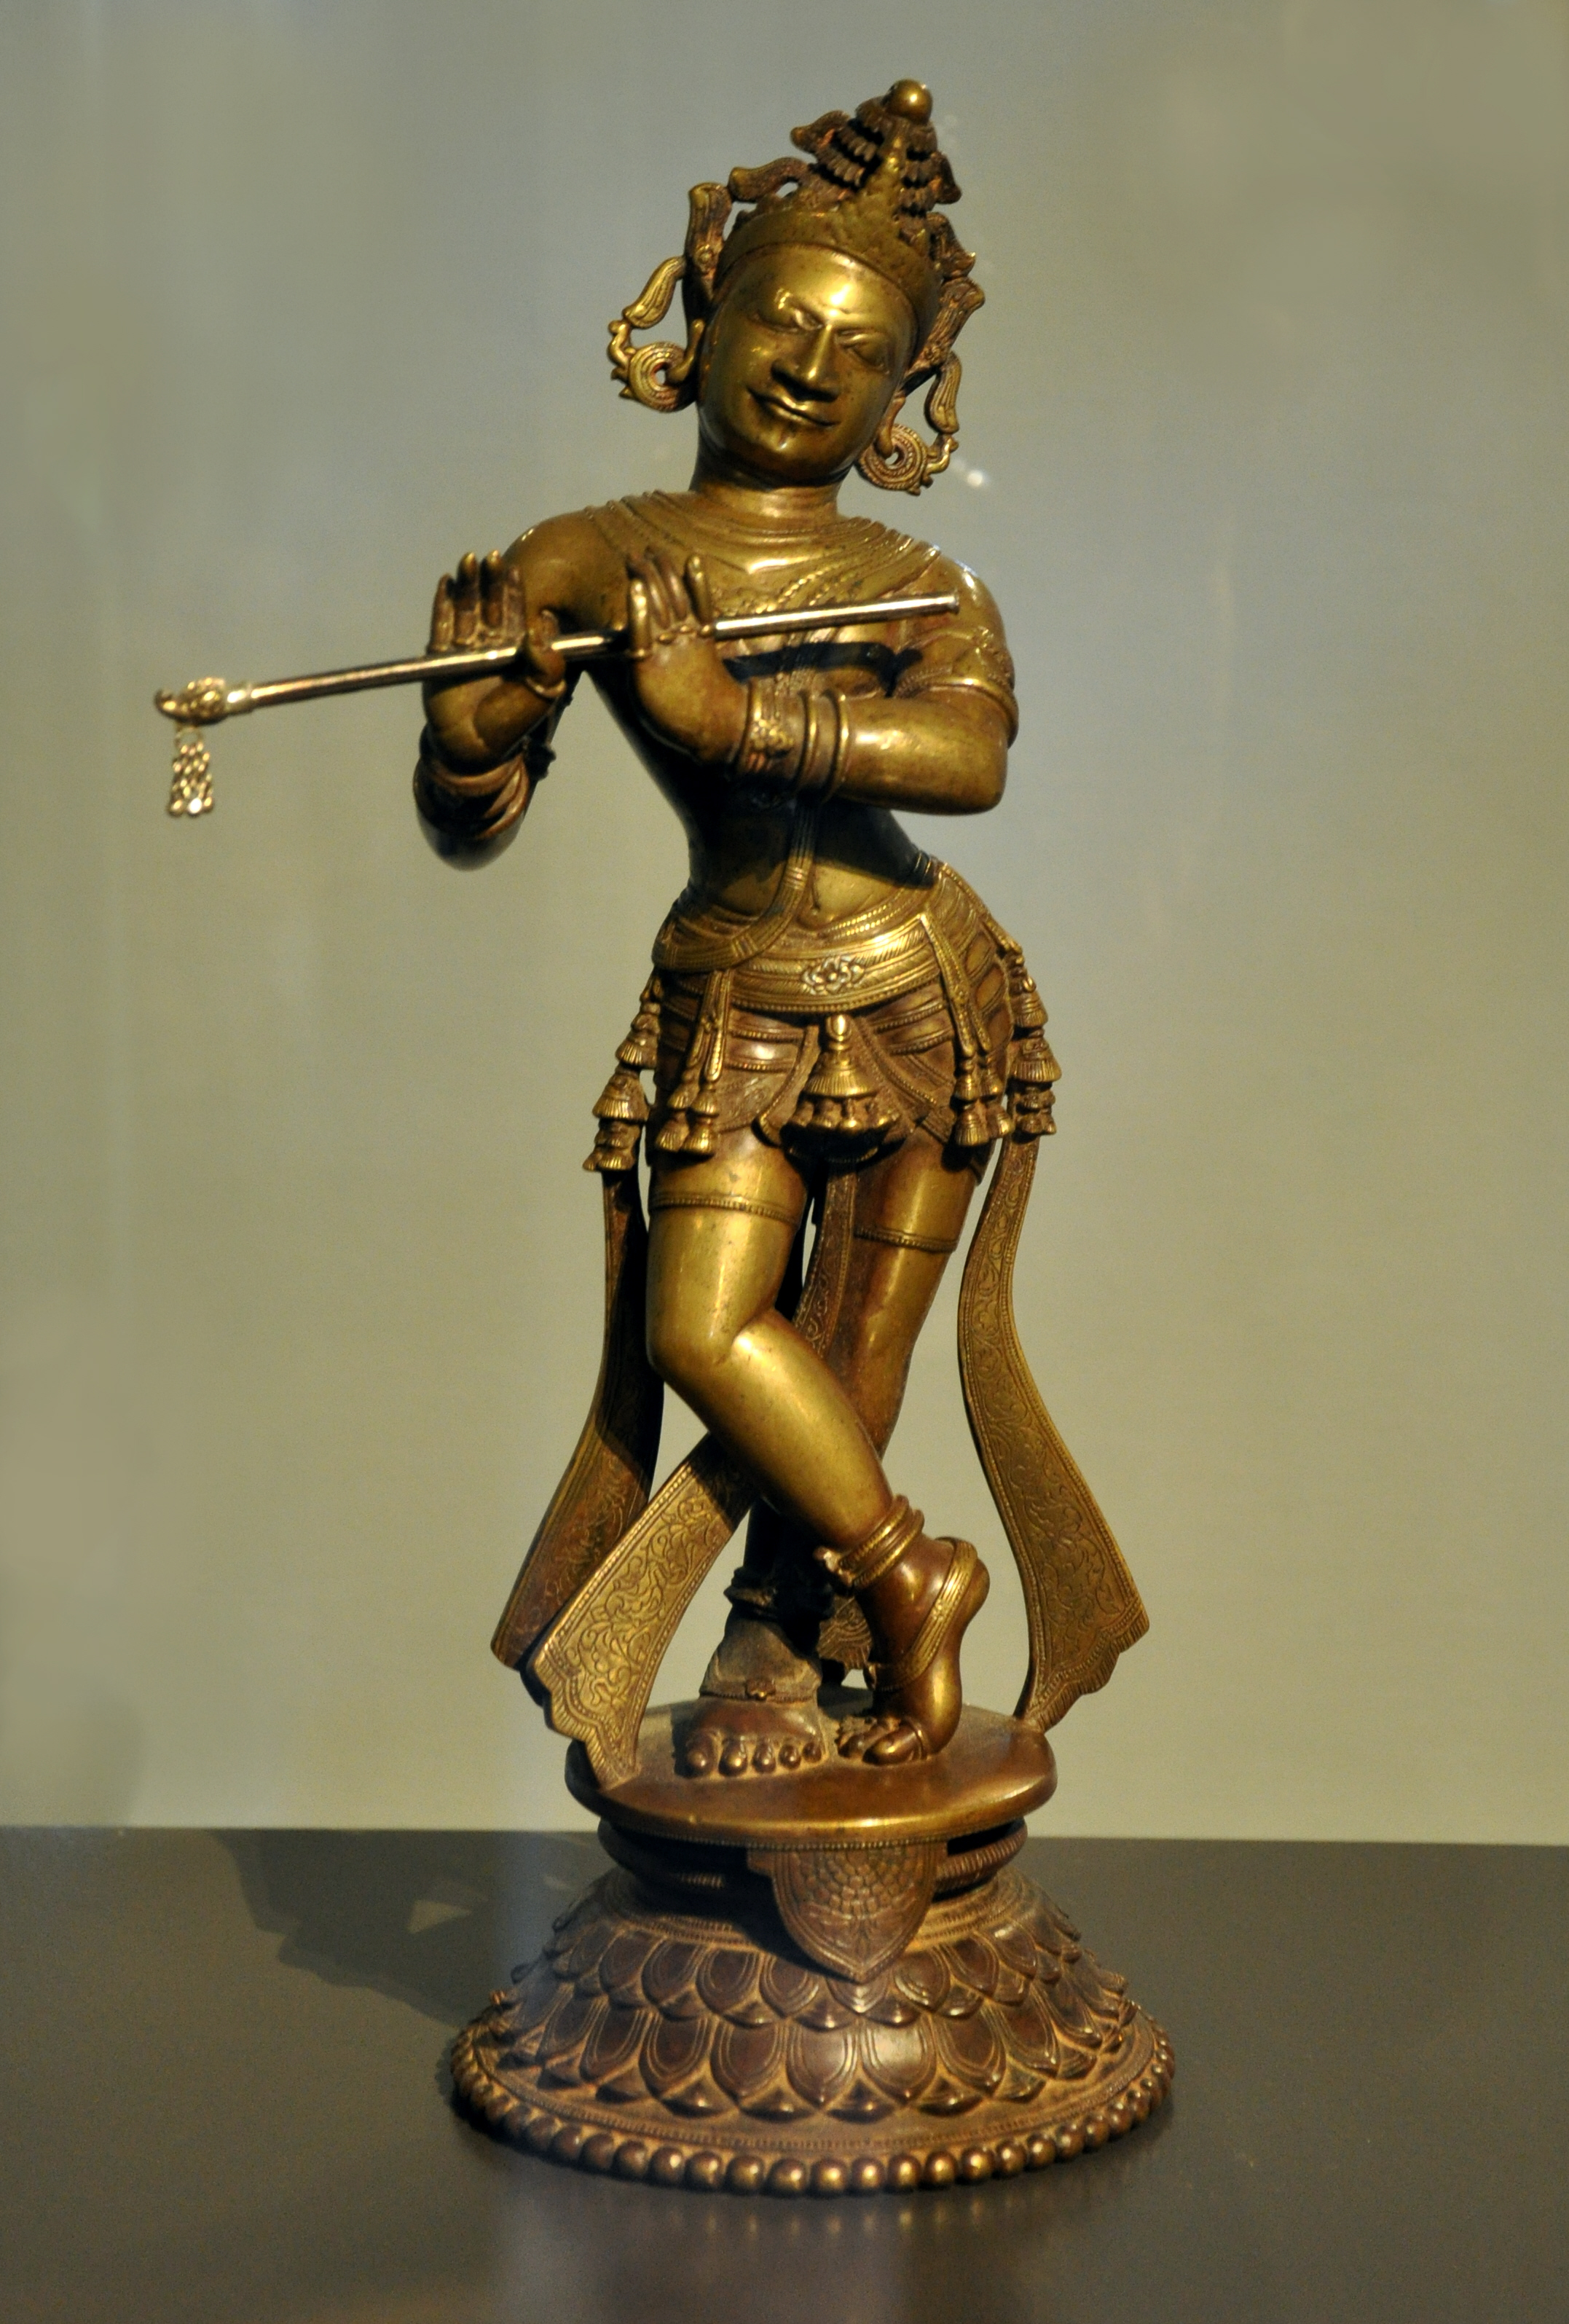 Depiction of Krishna